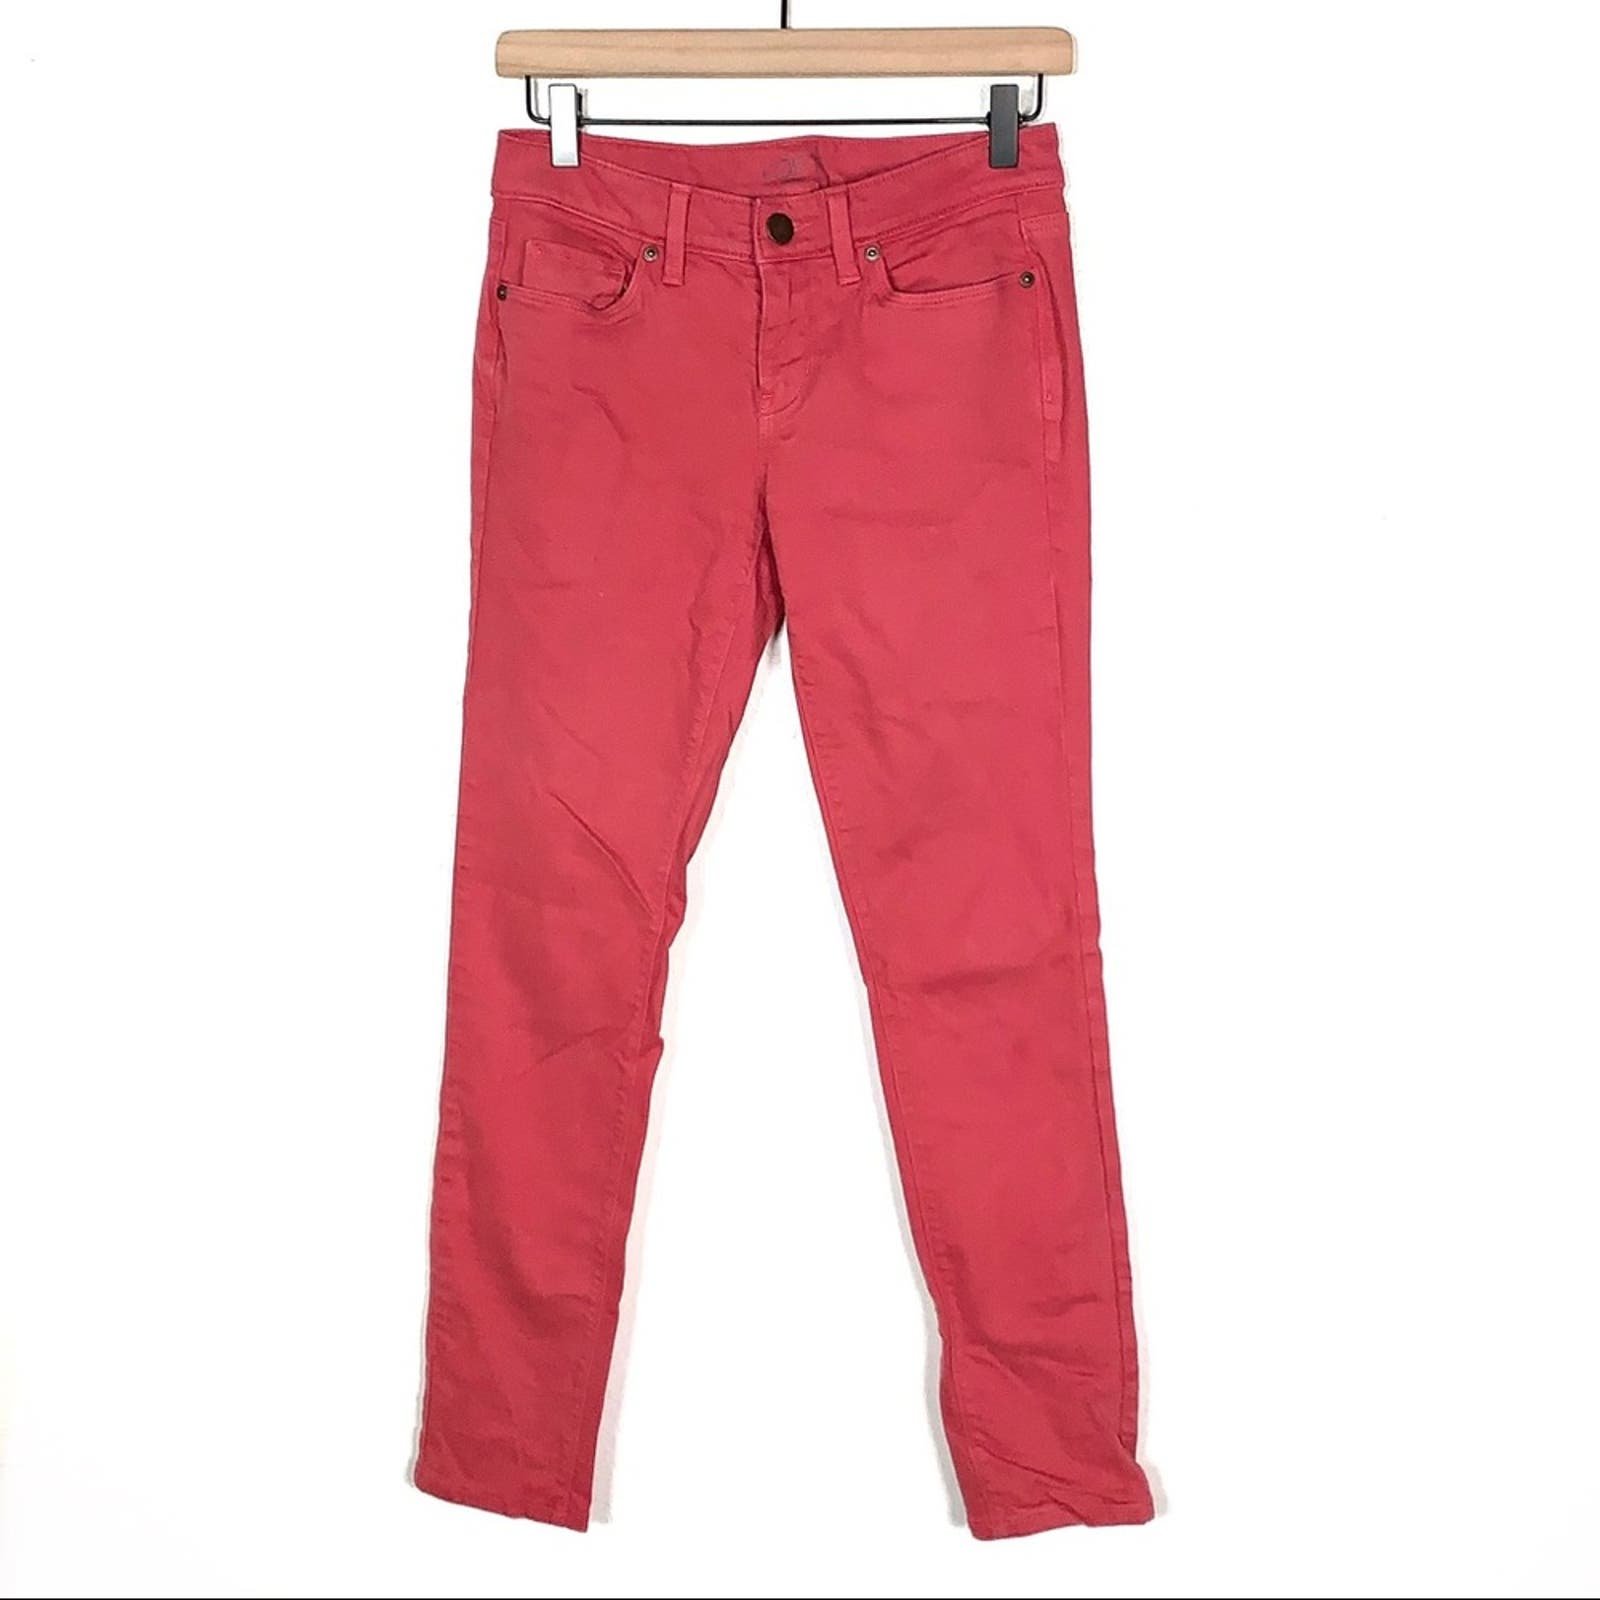 Popular Loft pink modern skinny low rise jeans OiyetxNY